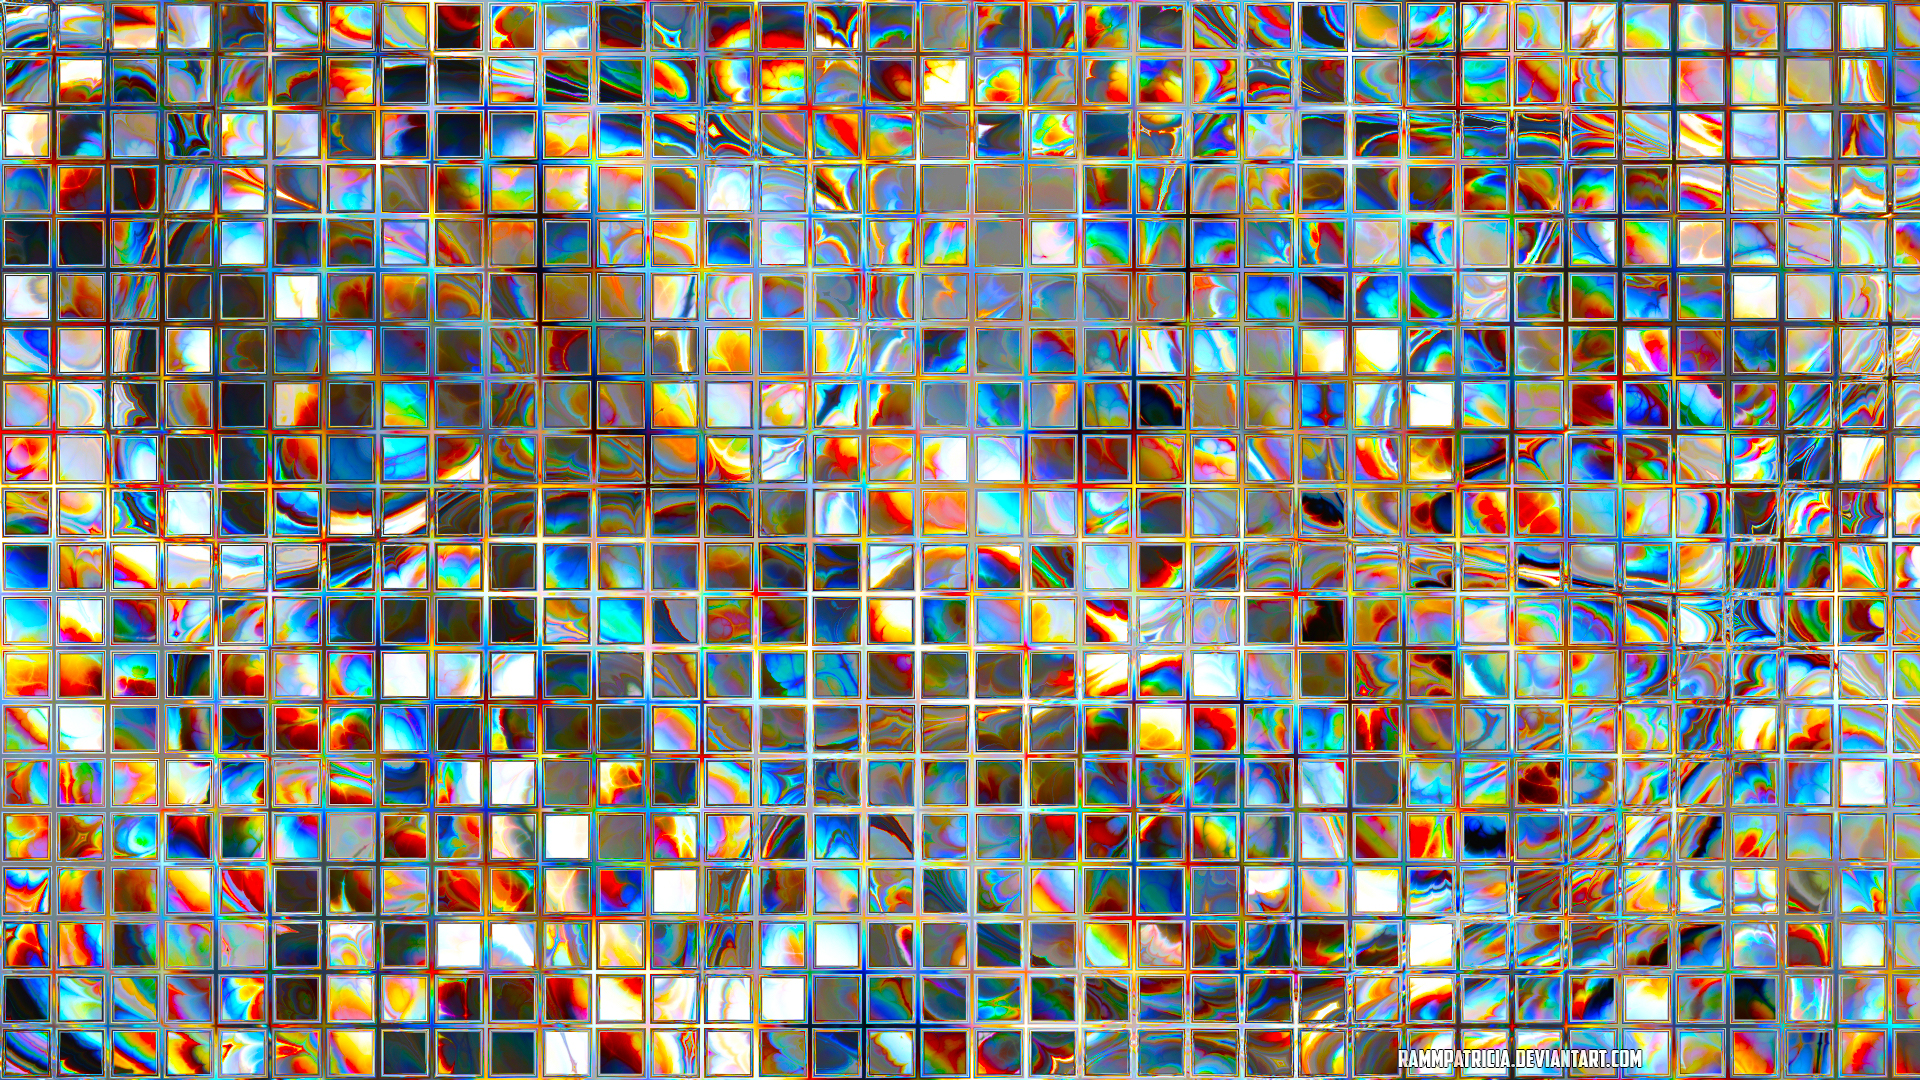 Abstract RammPatricia Digital Art Digital Watermarked 1920x1080